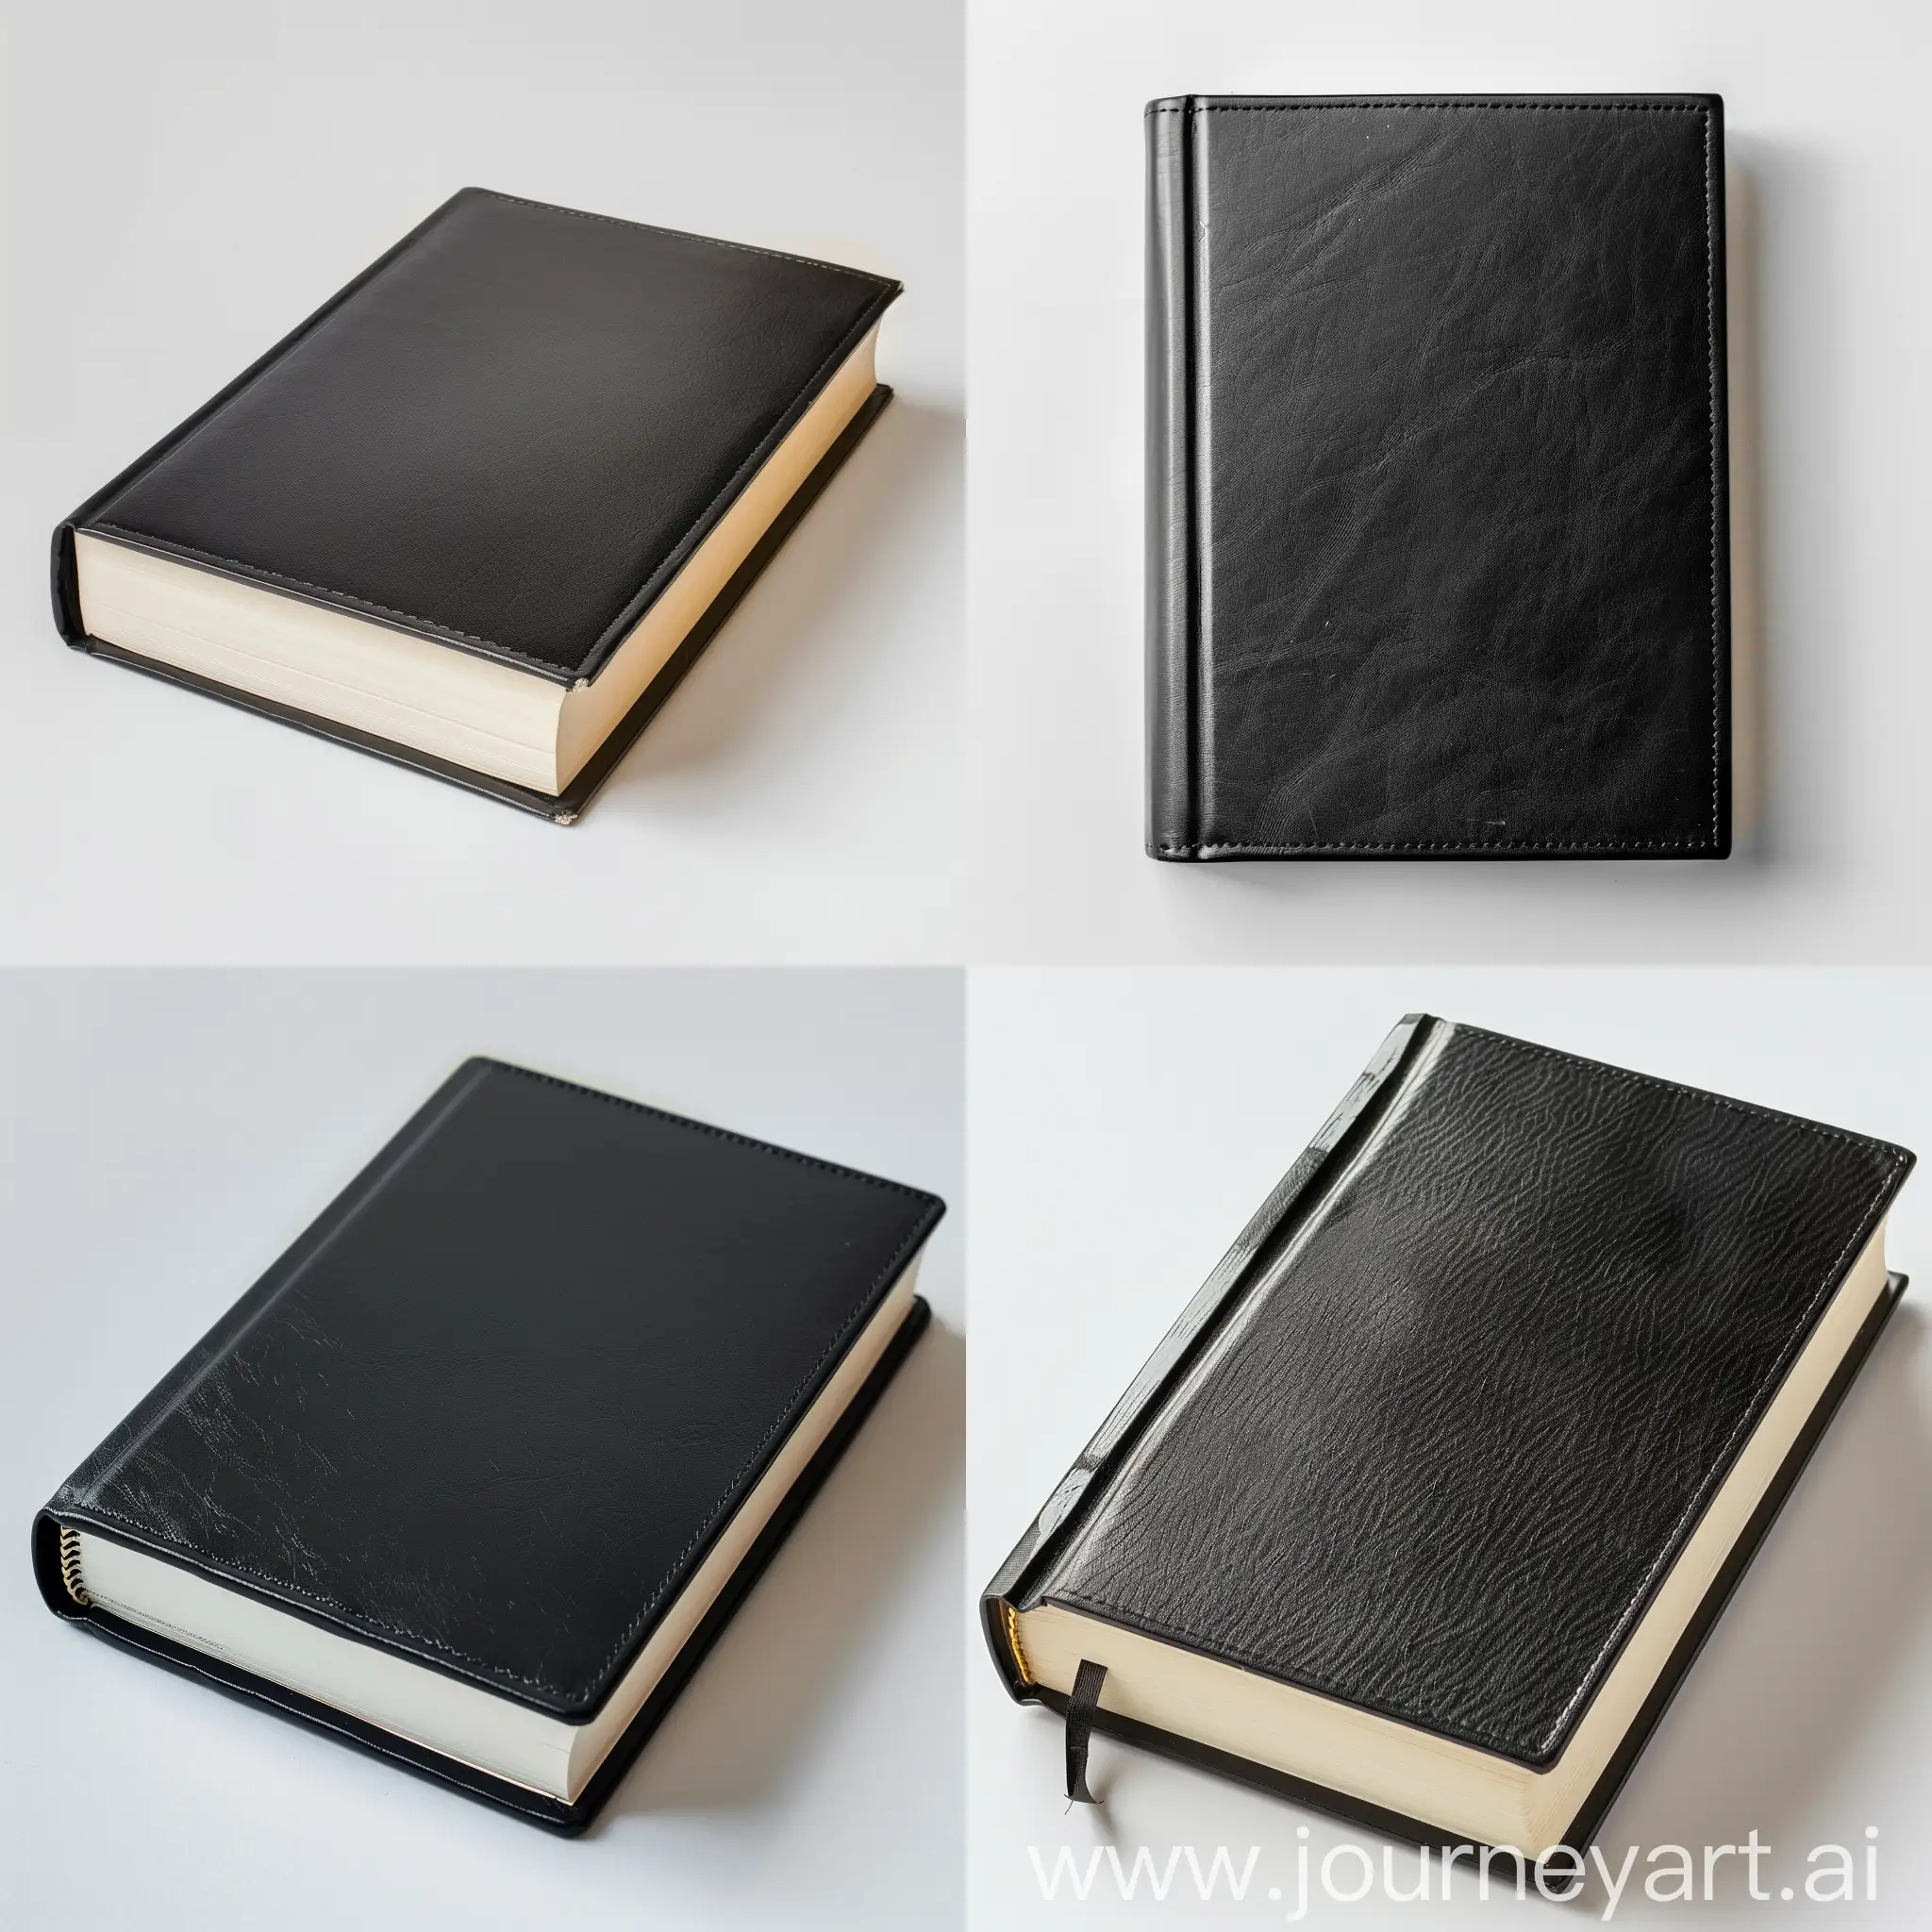 Elegant-Black-Book-on-Clean-White-Background